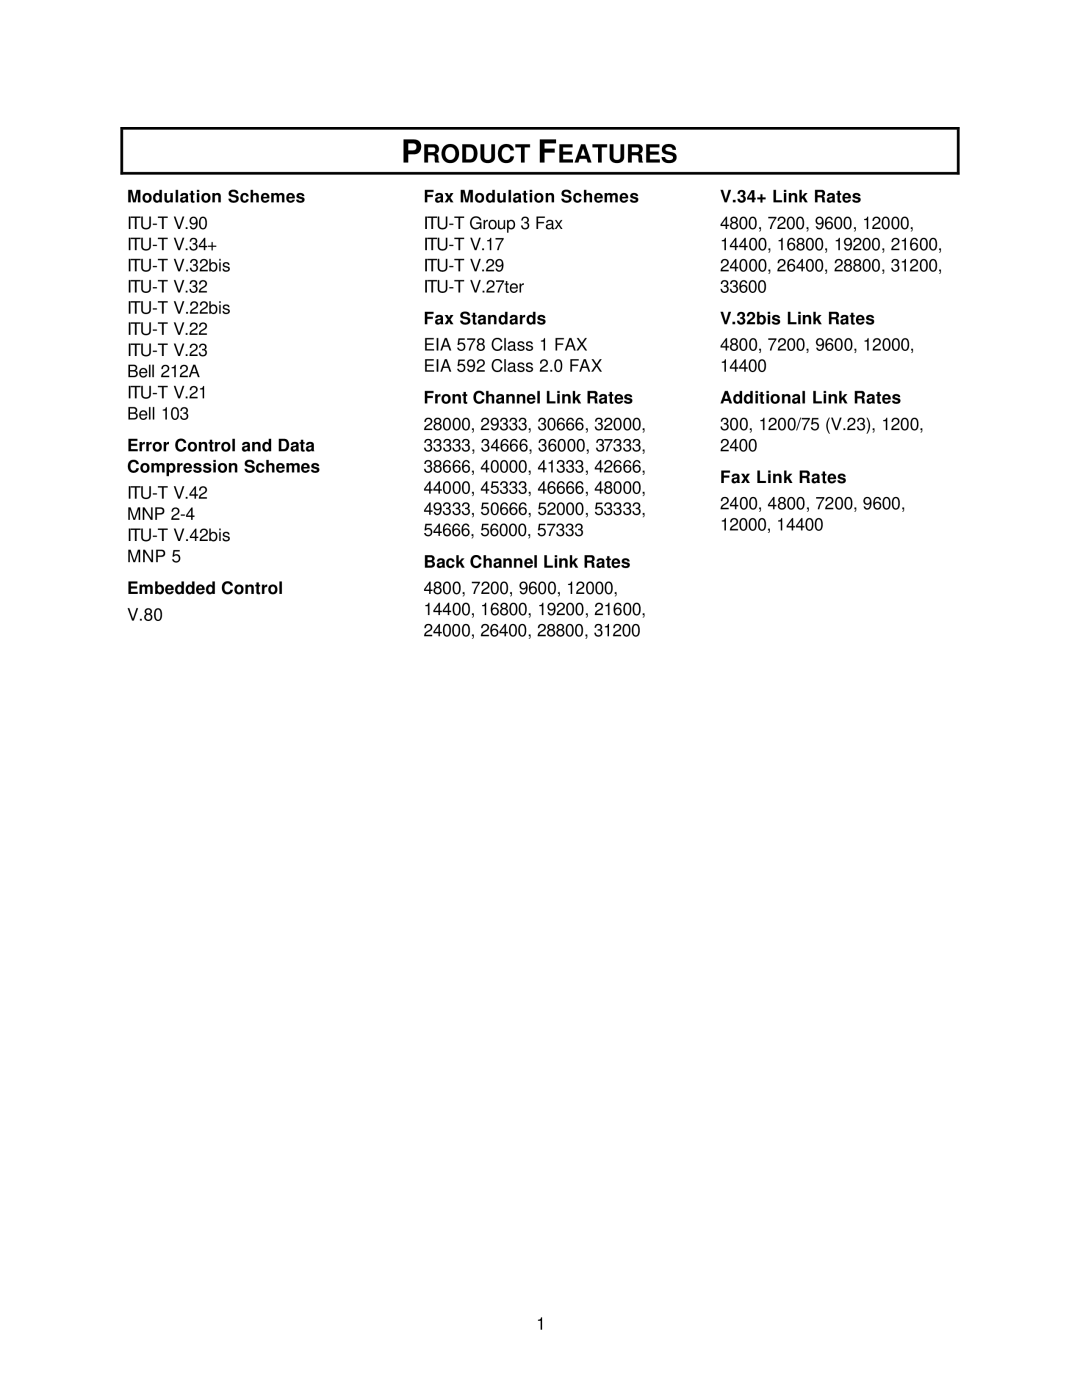 USRobotics 3Com manual Product Features, Embedded Control Fax Modulation Schemes 34+ Link Rates 